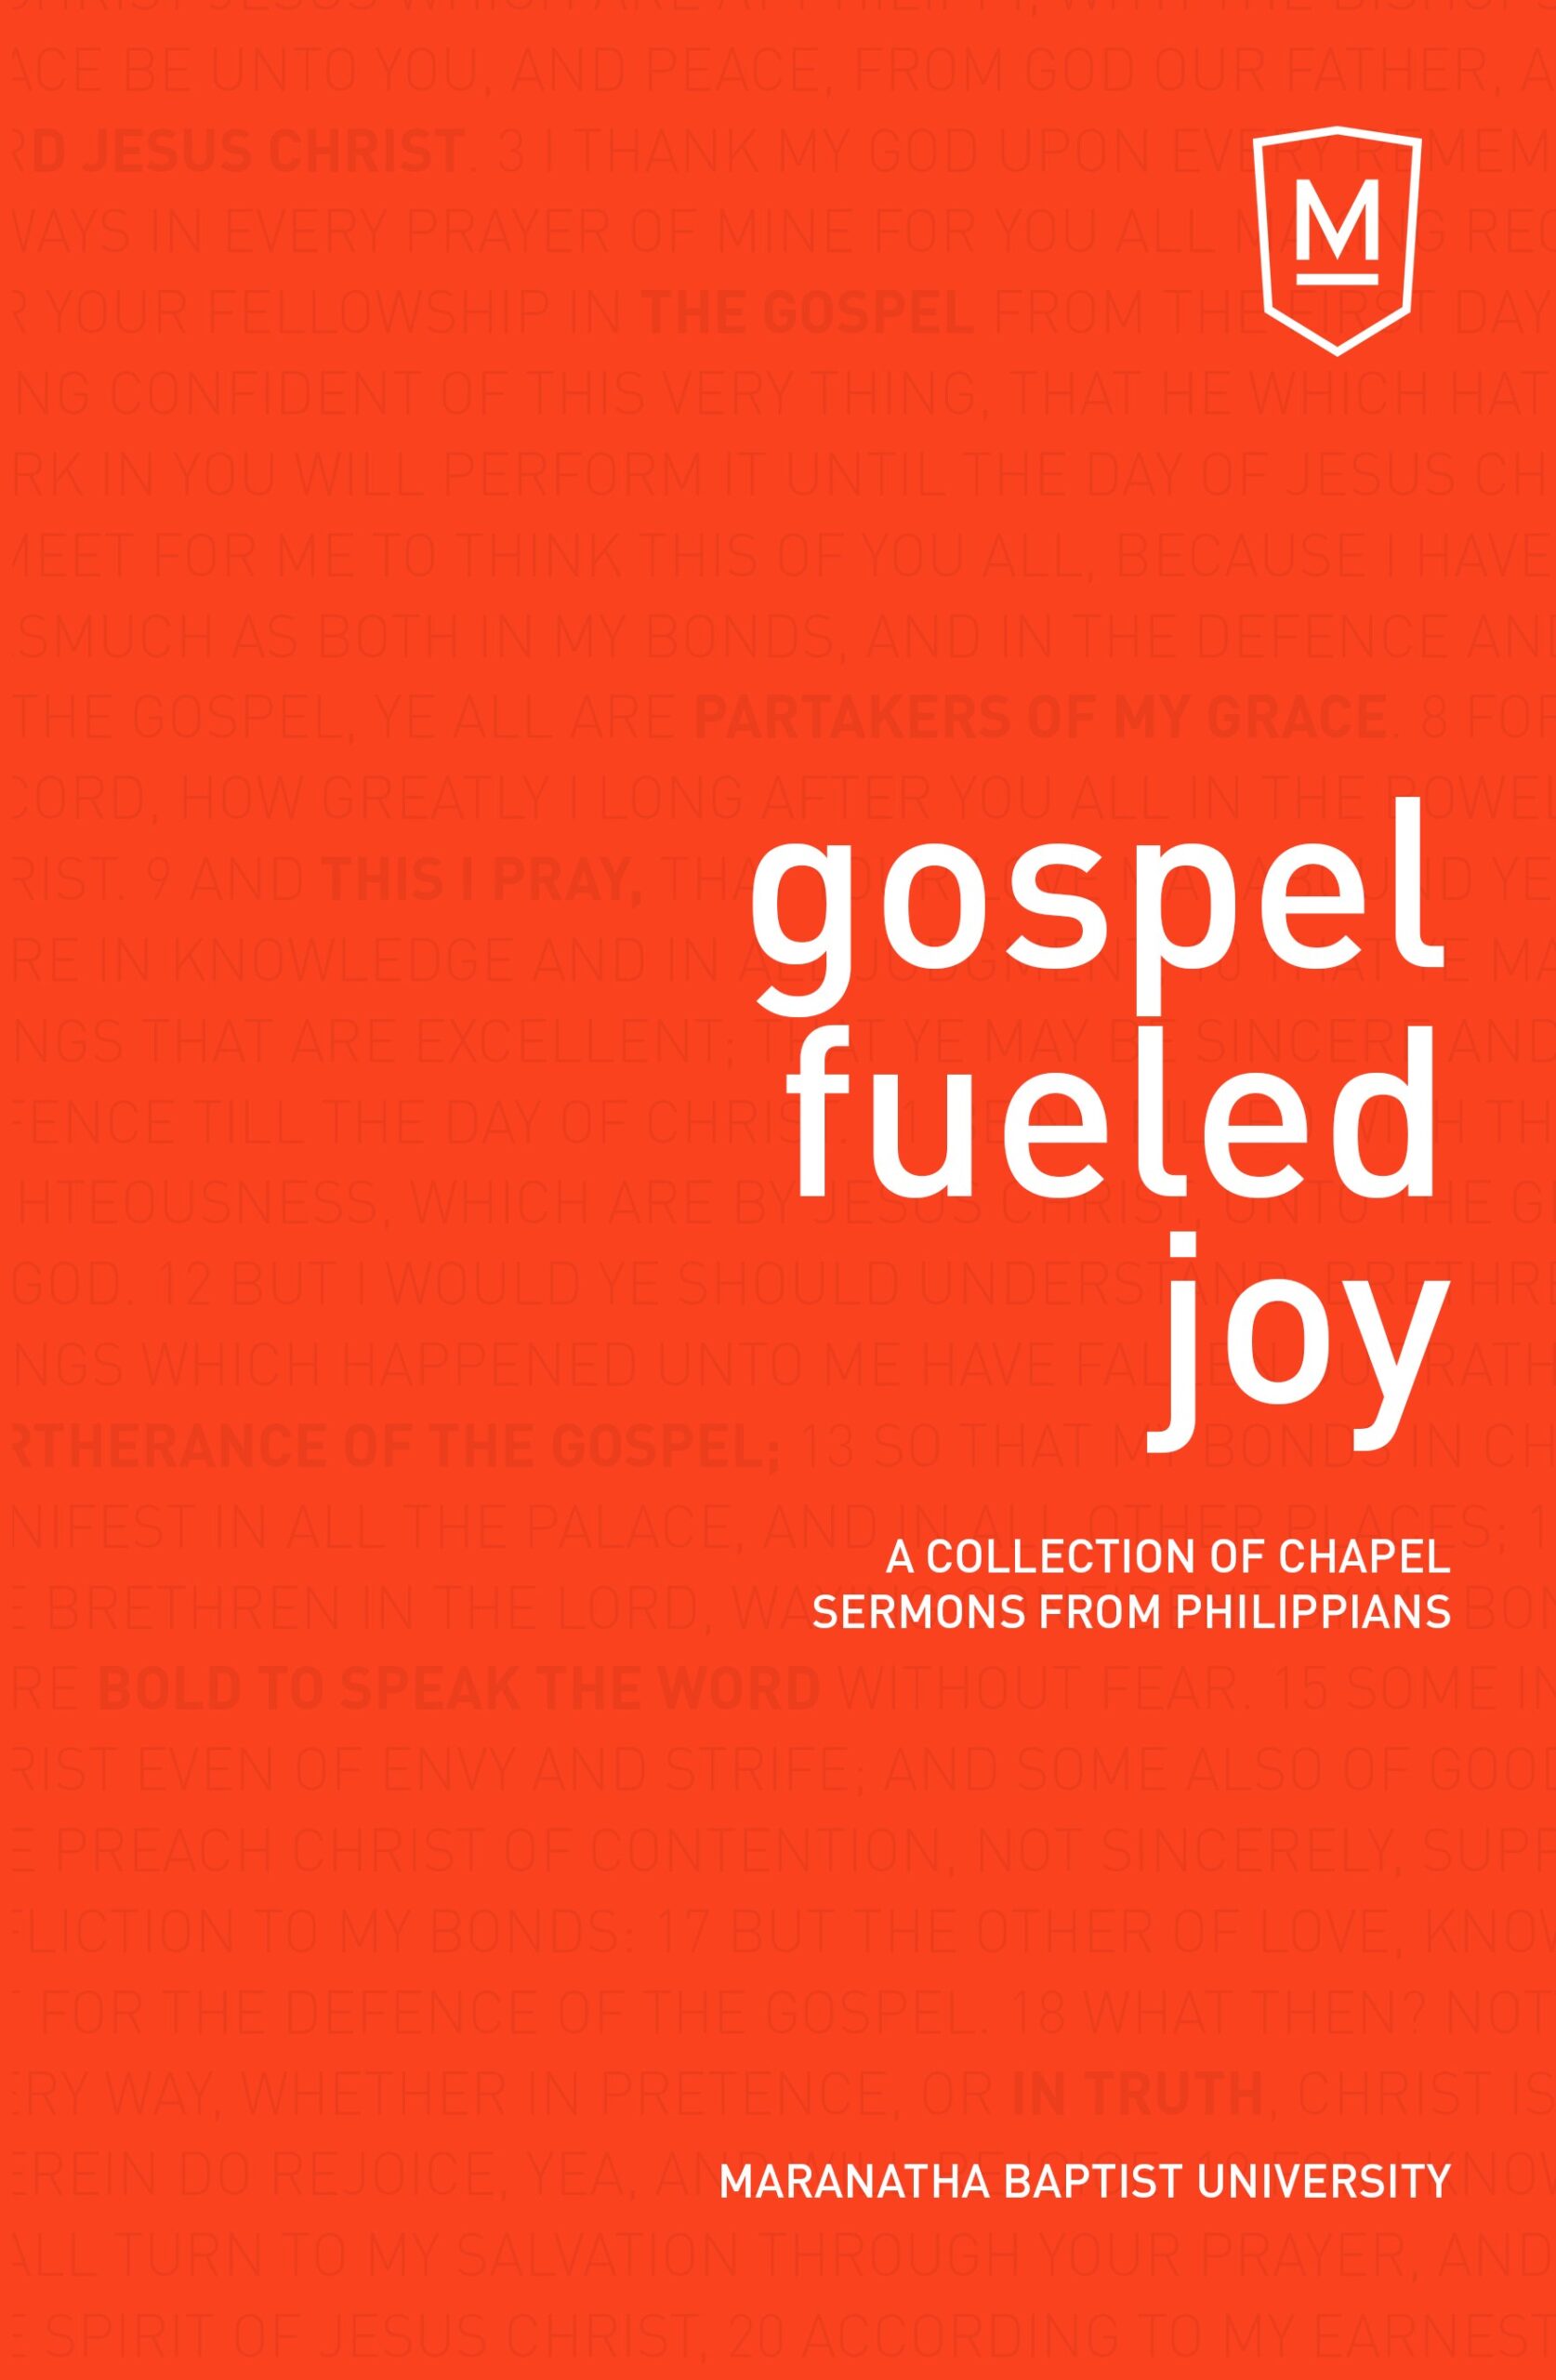 chapel sermons collection: gospel fueled joy